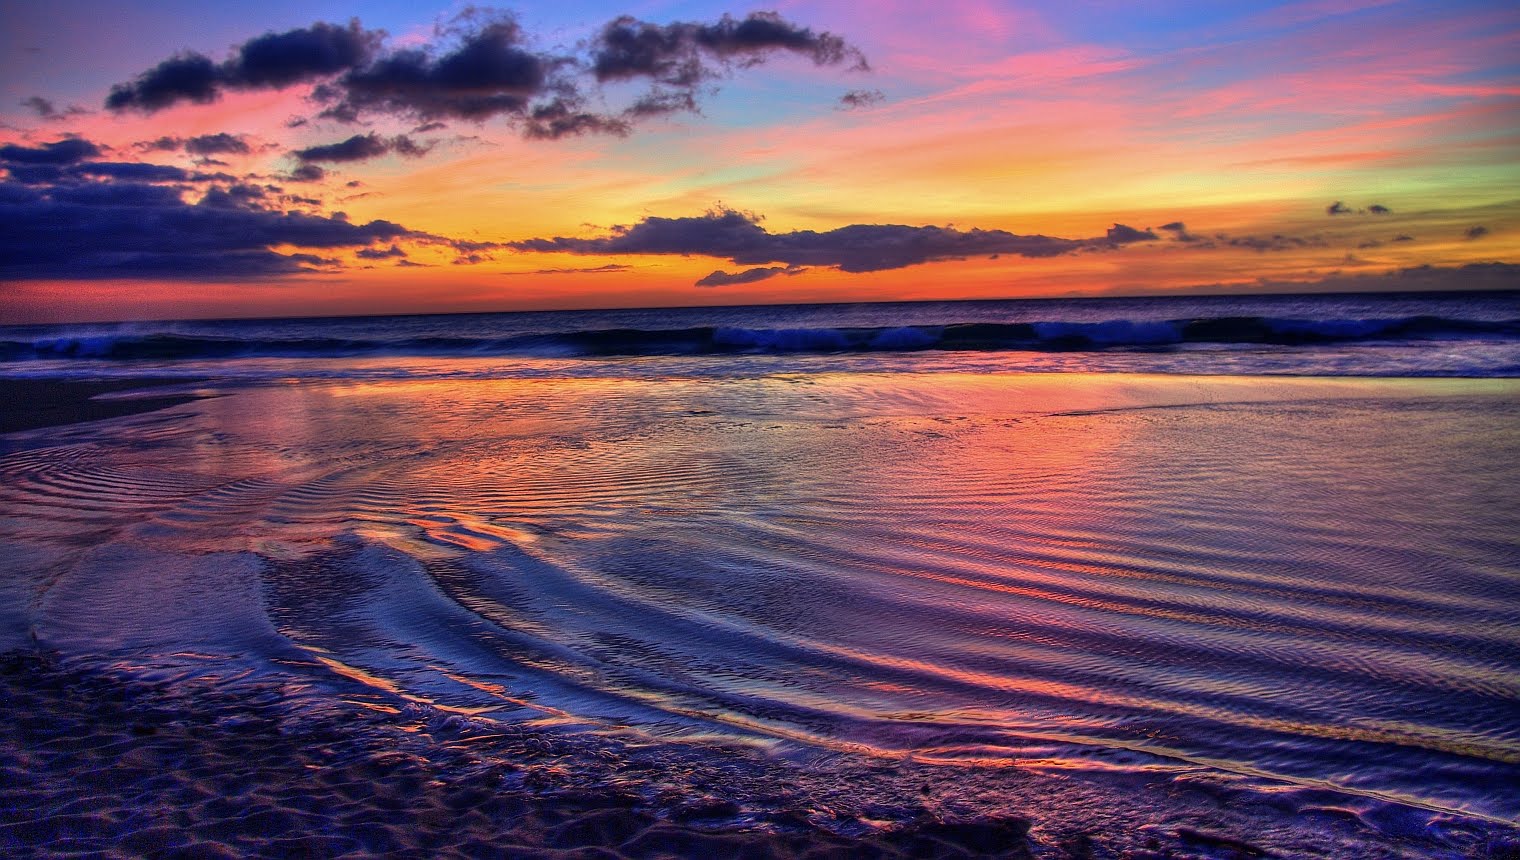  background and popular hawaii favorite hawaiian free shoreline sunset